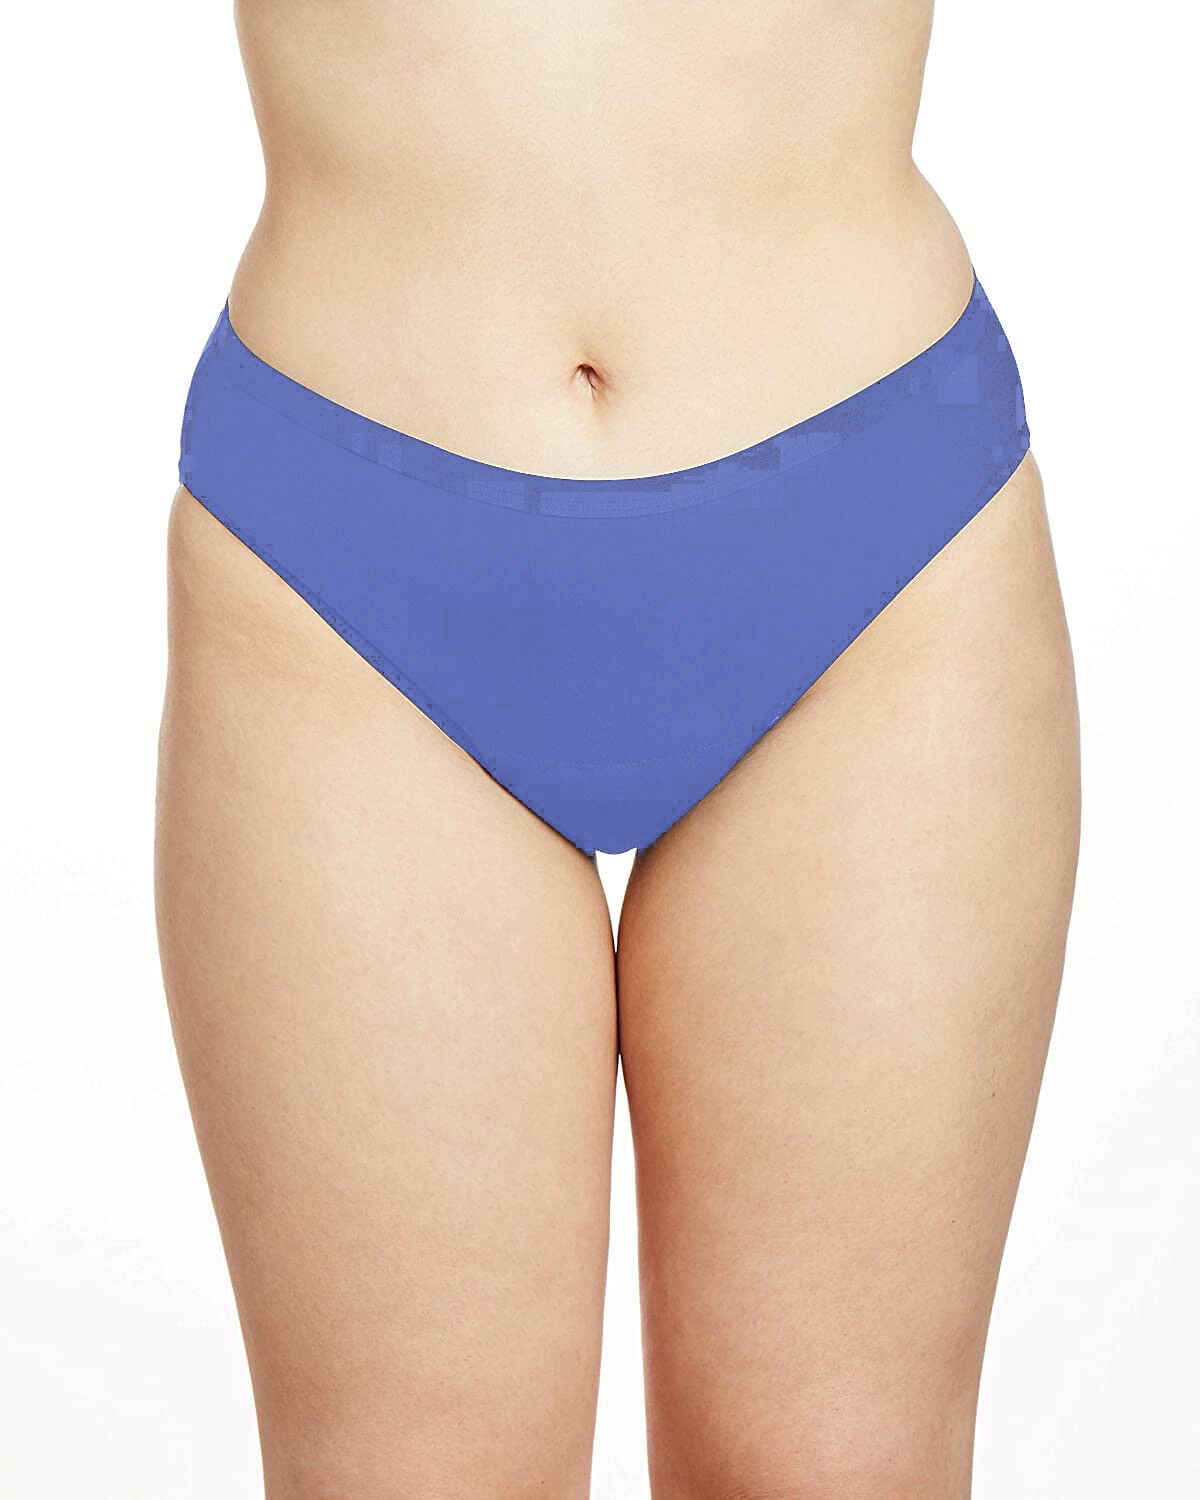 Speax Bikini Thinx Women's Underwear For Bladder Leak Protection Small